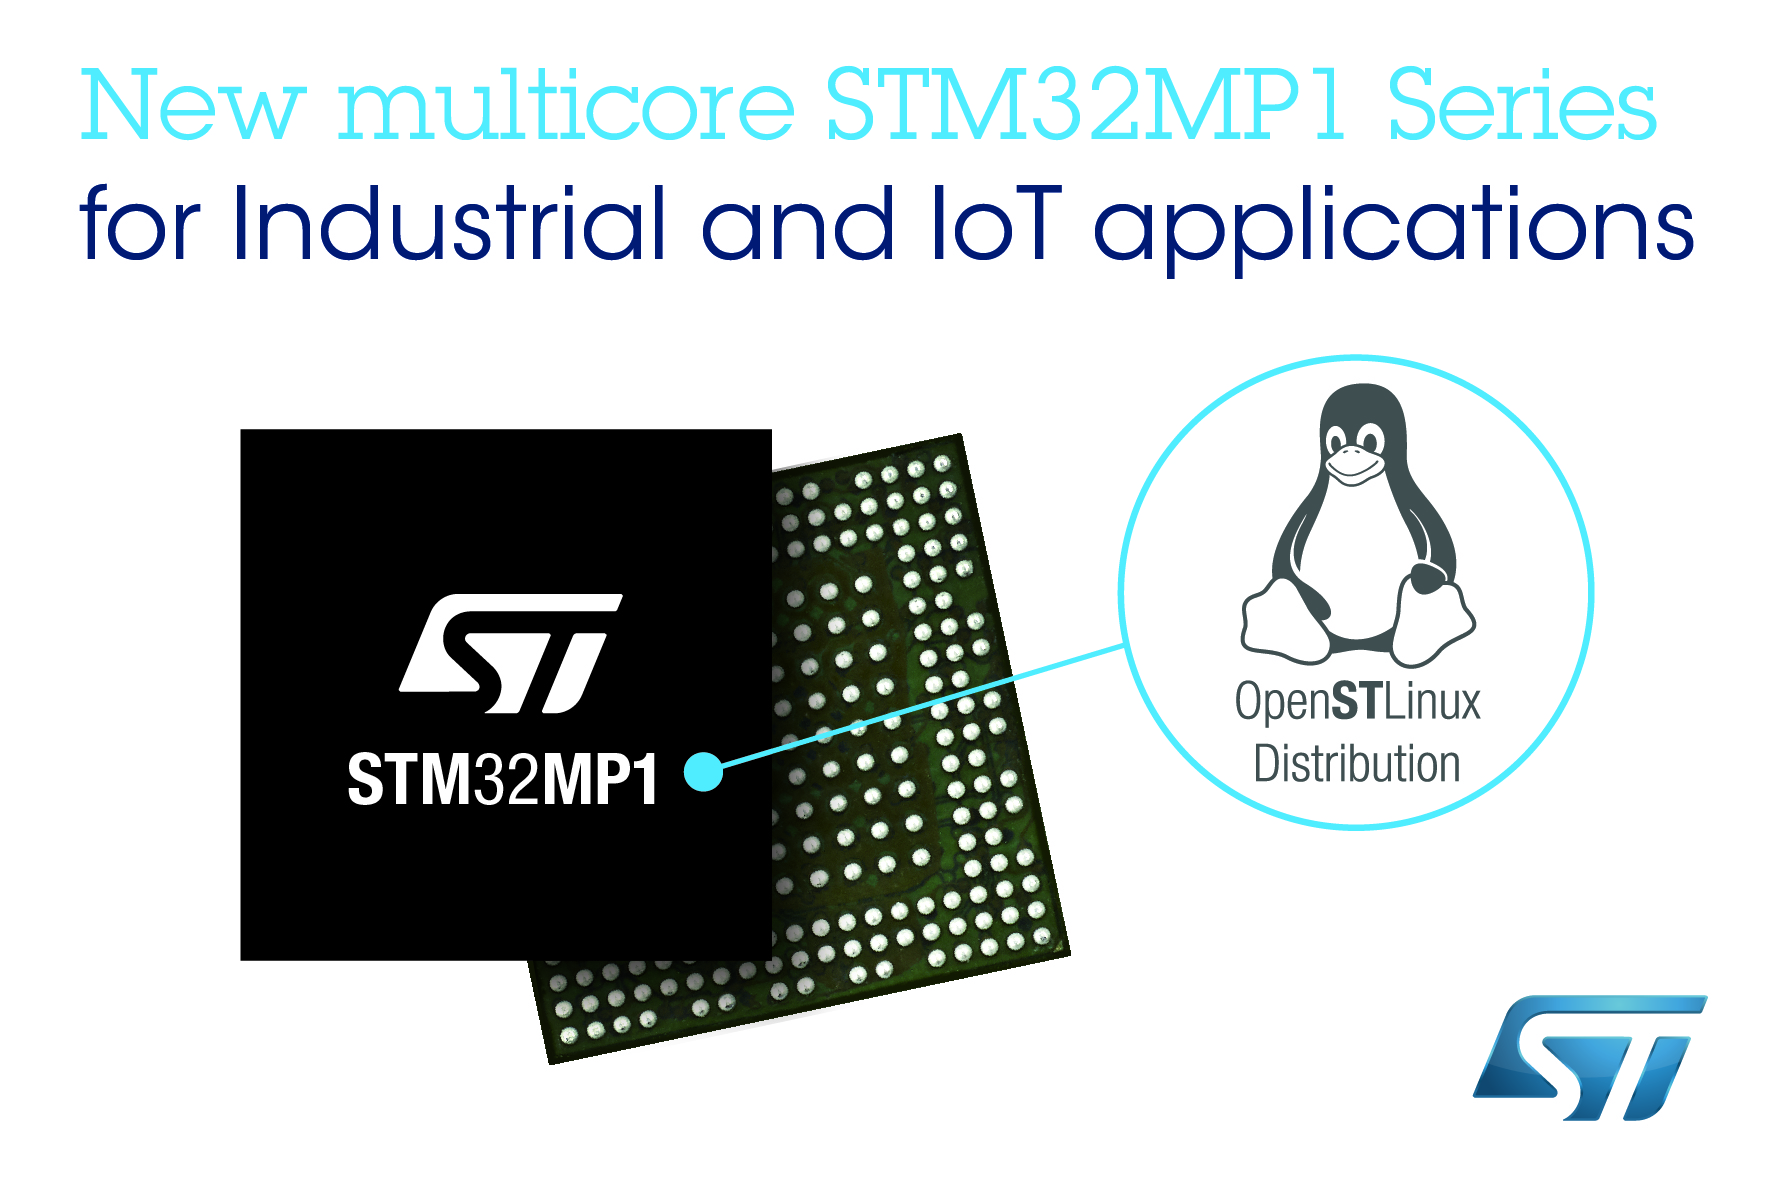 mpu 9250 sensor and nucleo stm32